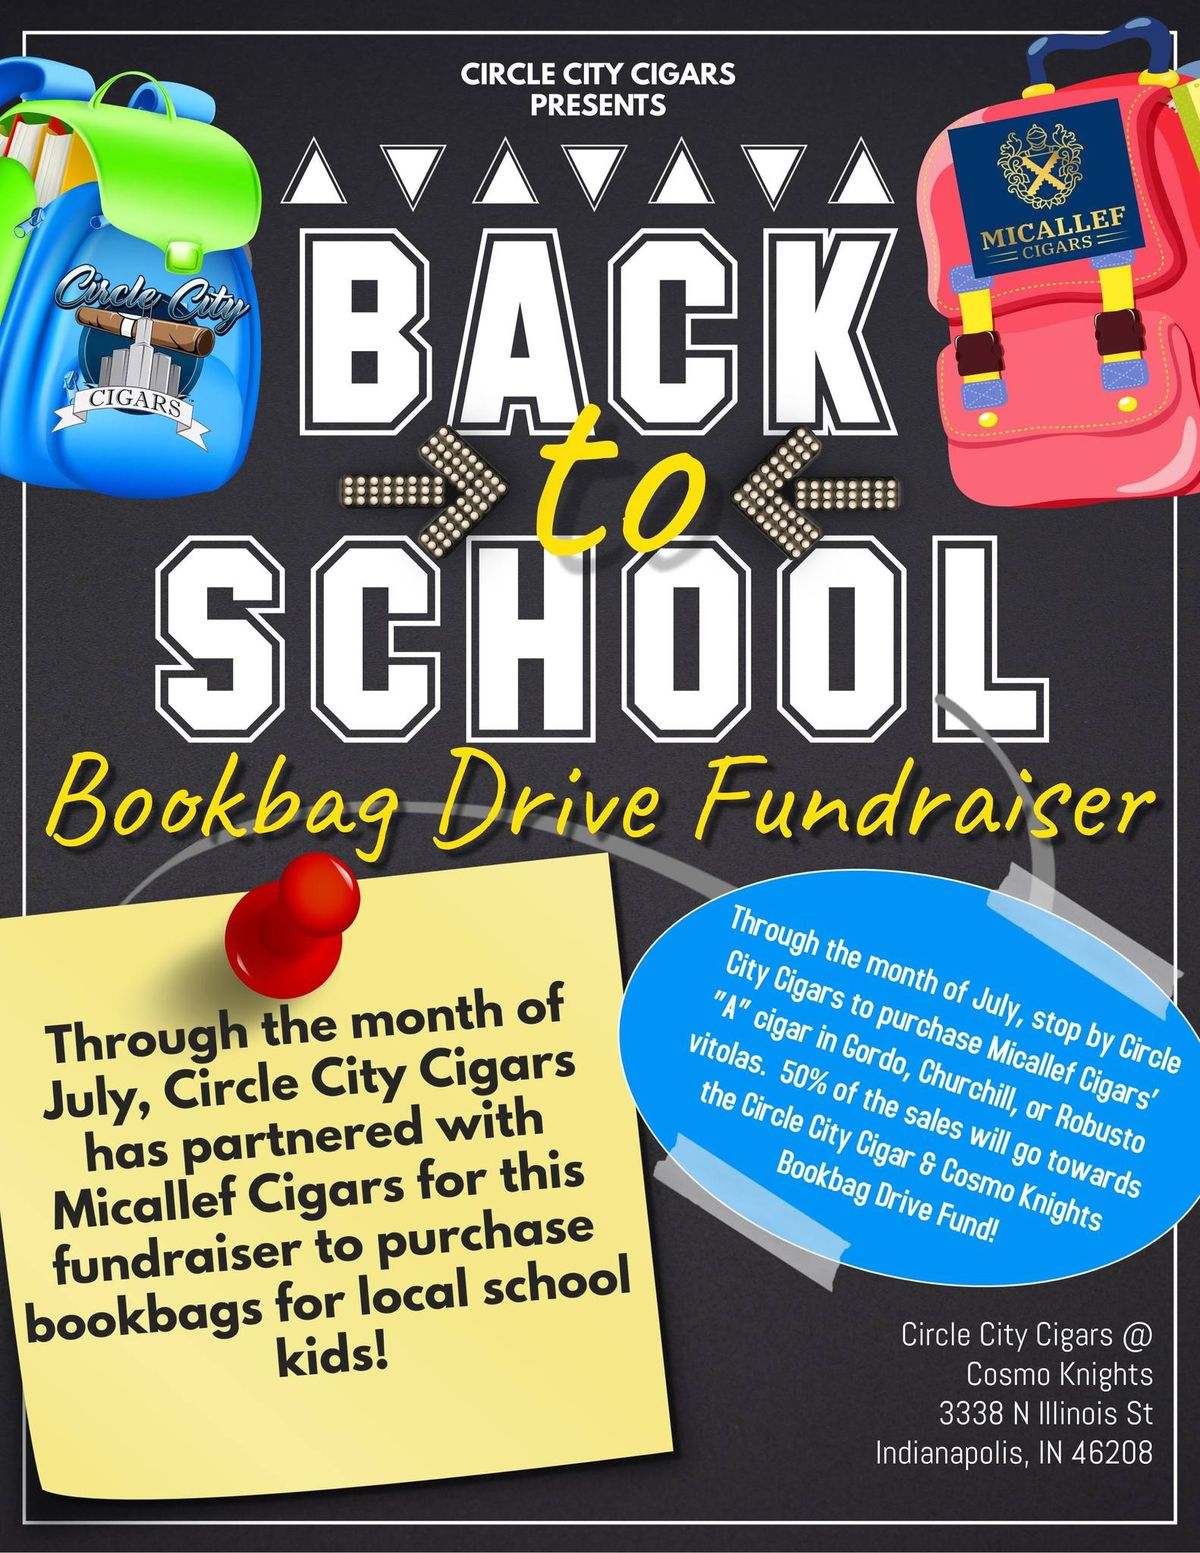 Circle City Cigars\u2019 Back-To-School Bookbag Drive Fundraiser